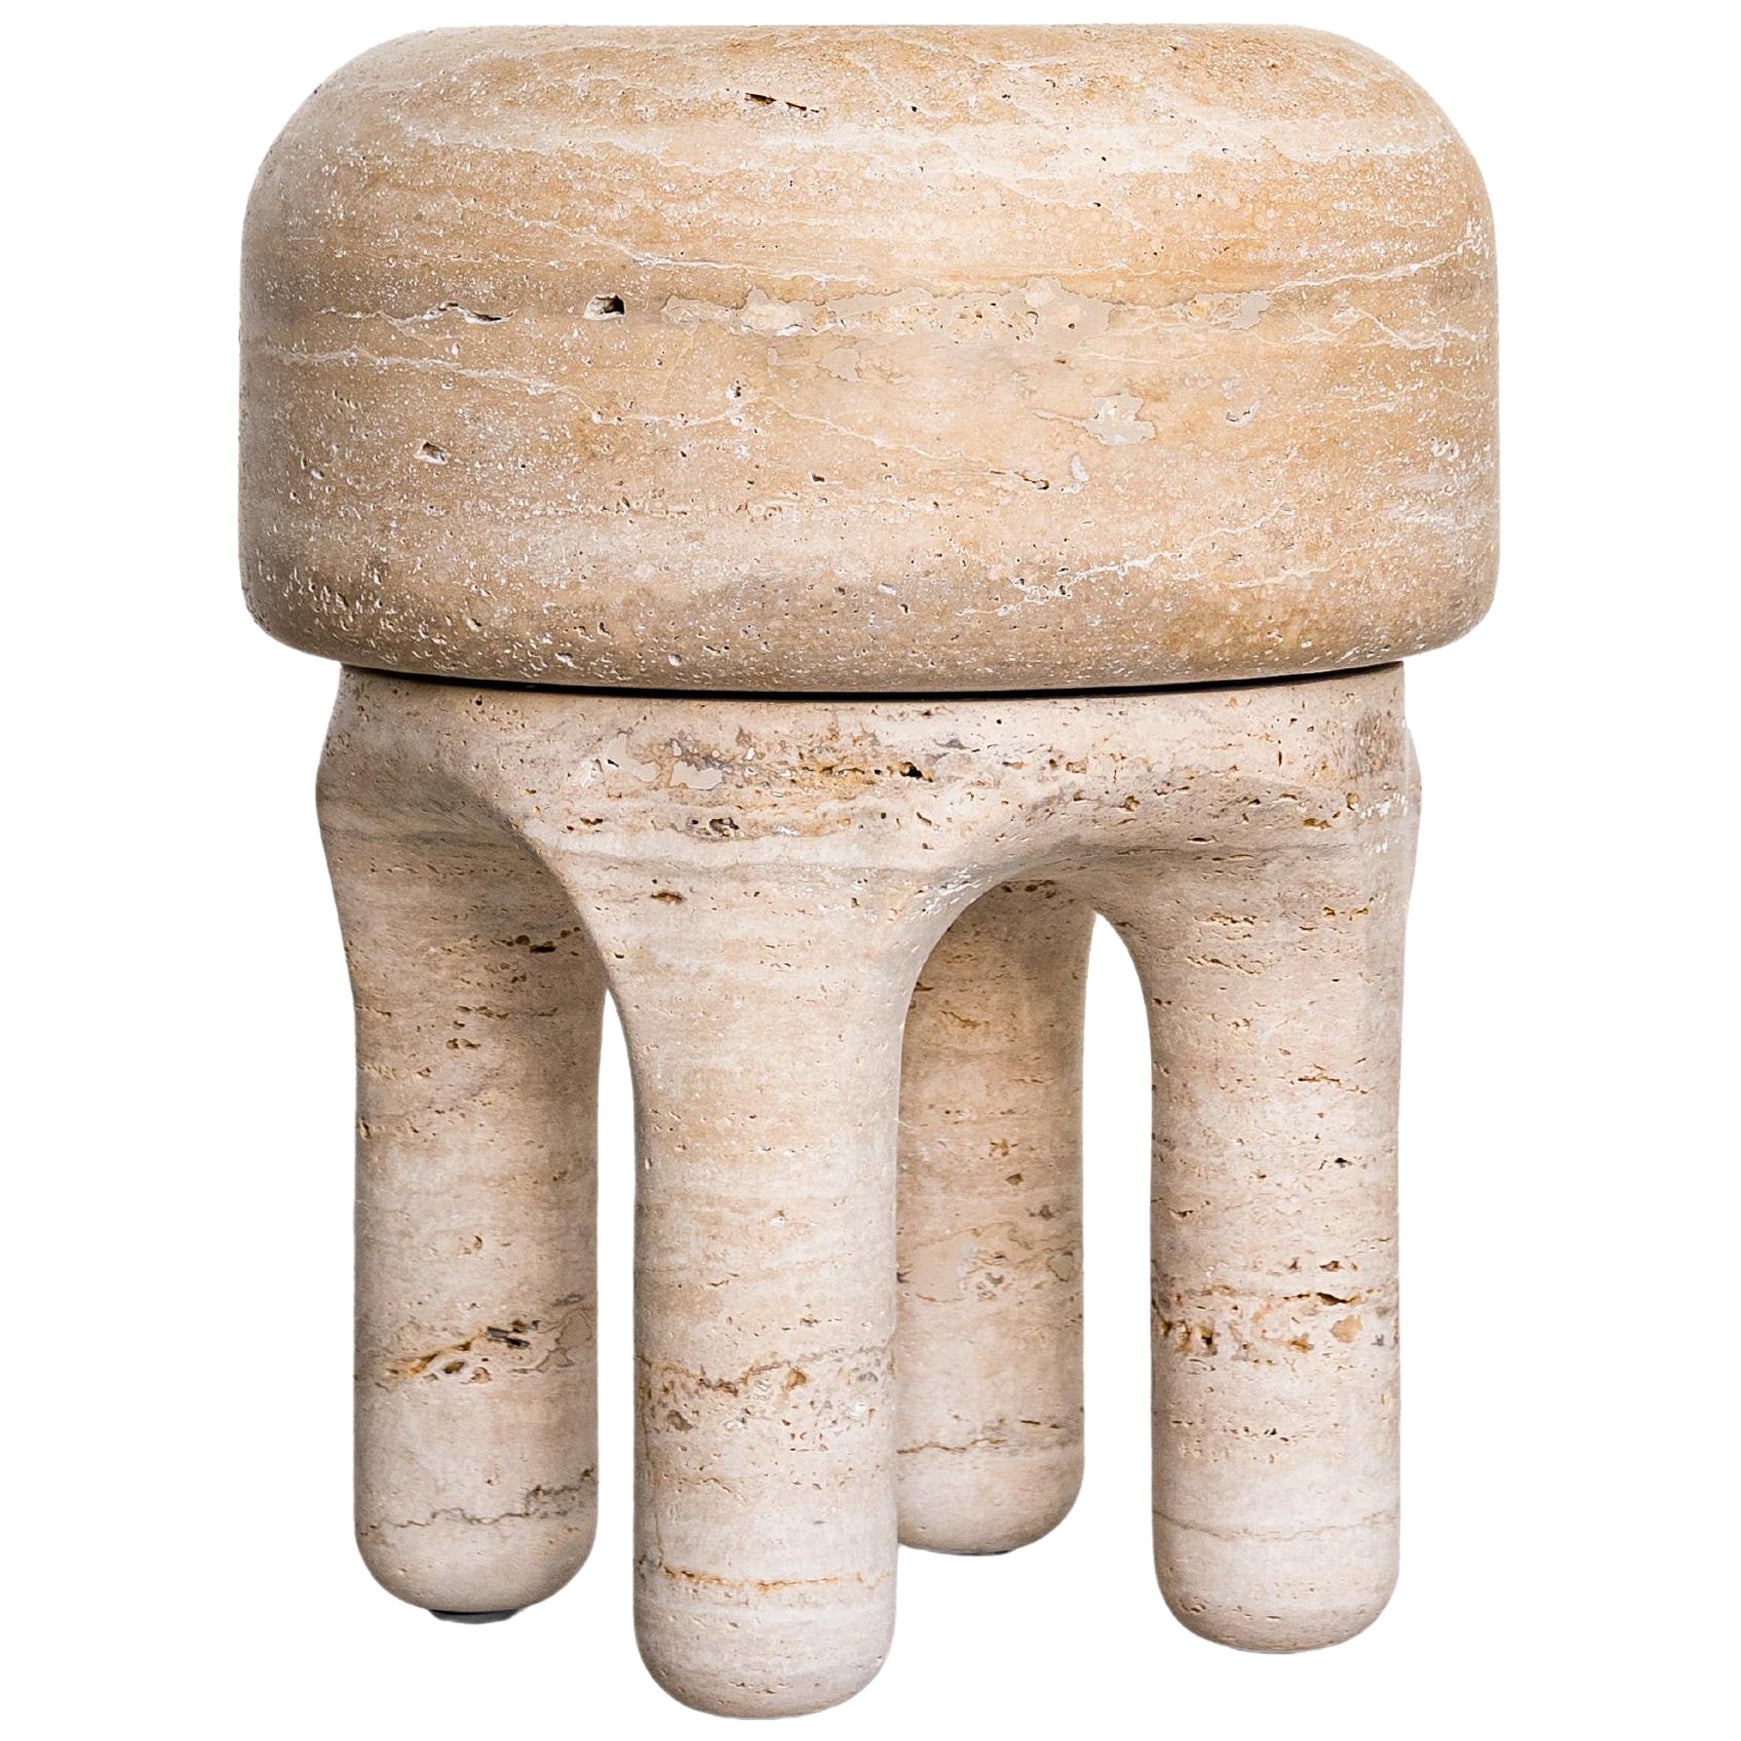 Organic Modern Stool Table Sculpture in Travertine - Urban Wabi Style For Sale